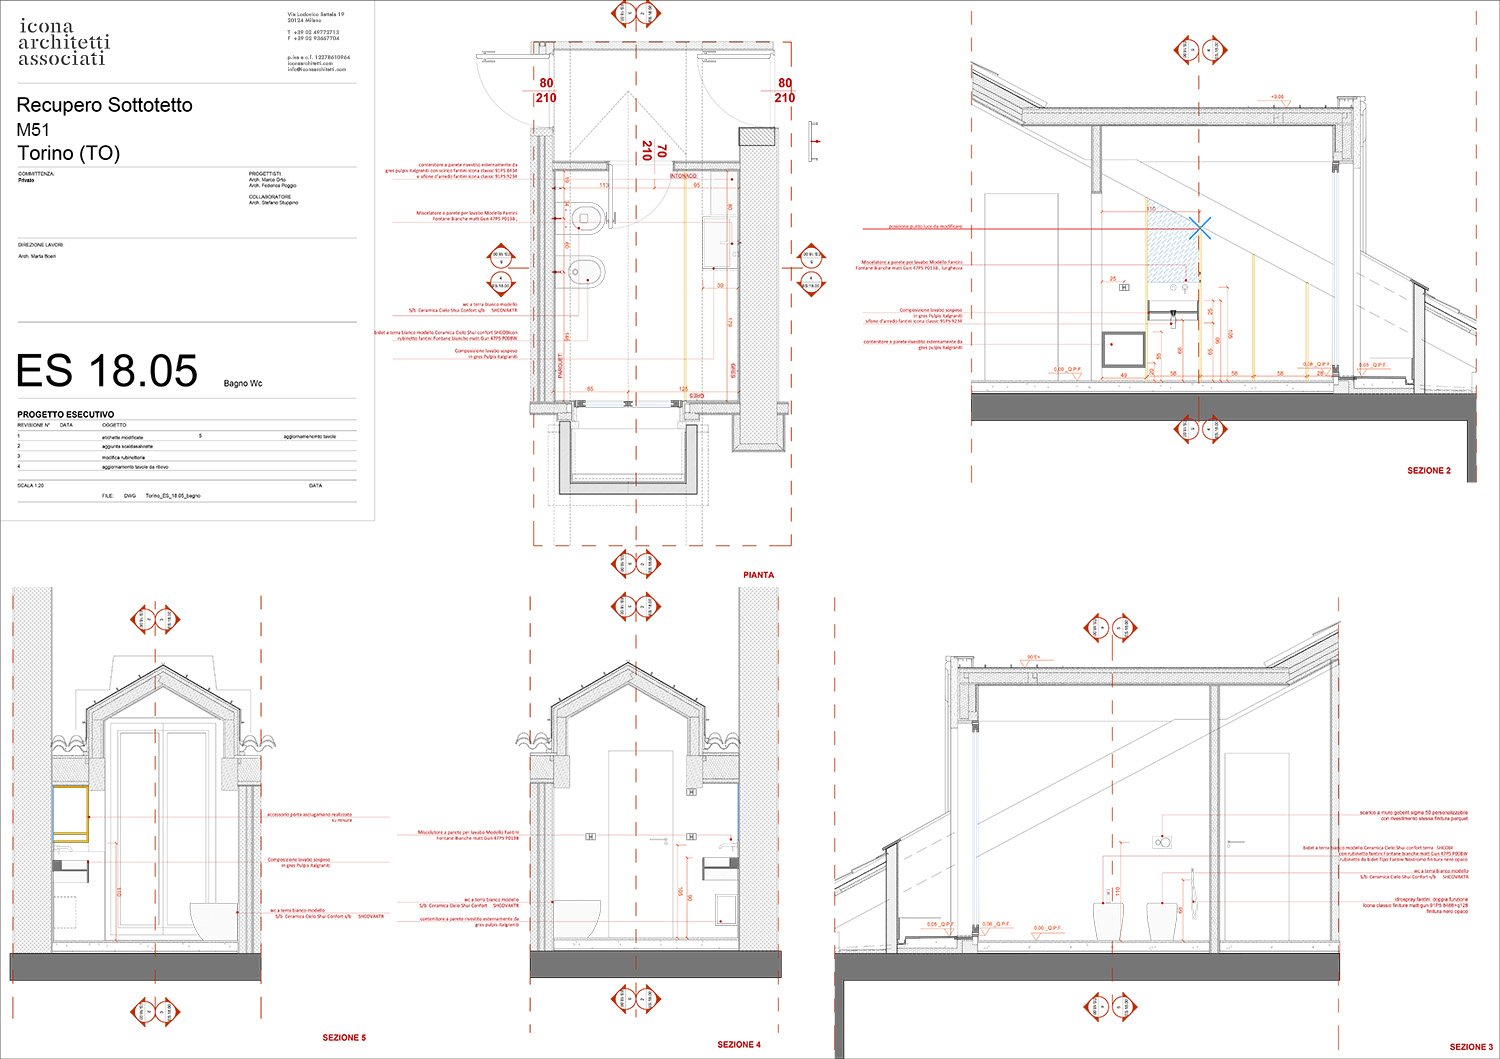 Guess bathroom executive drawing | Icona Architetti Associati